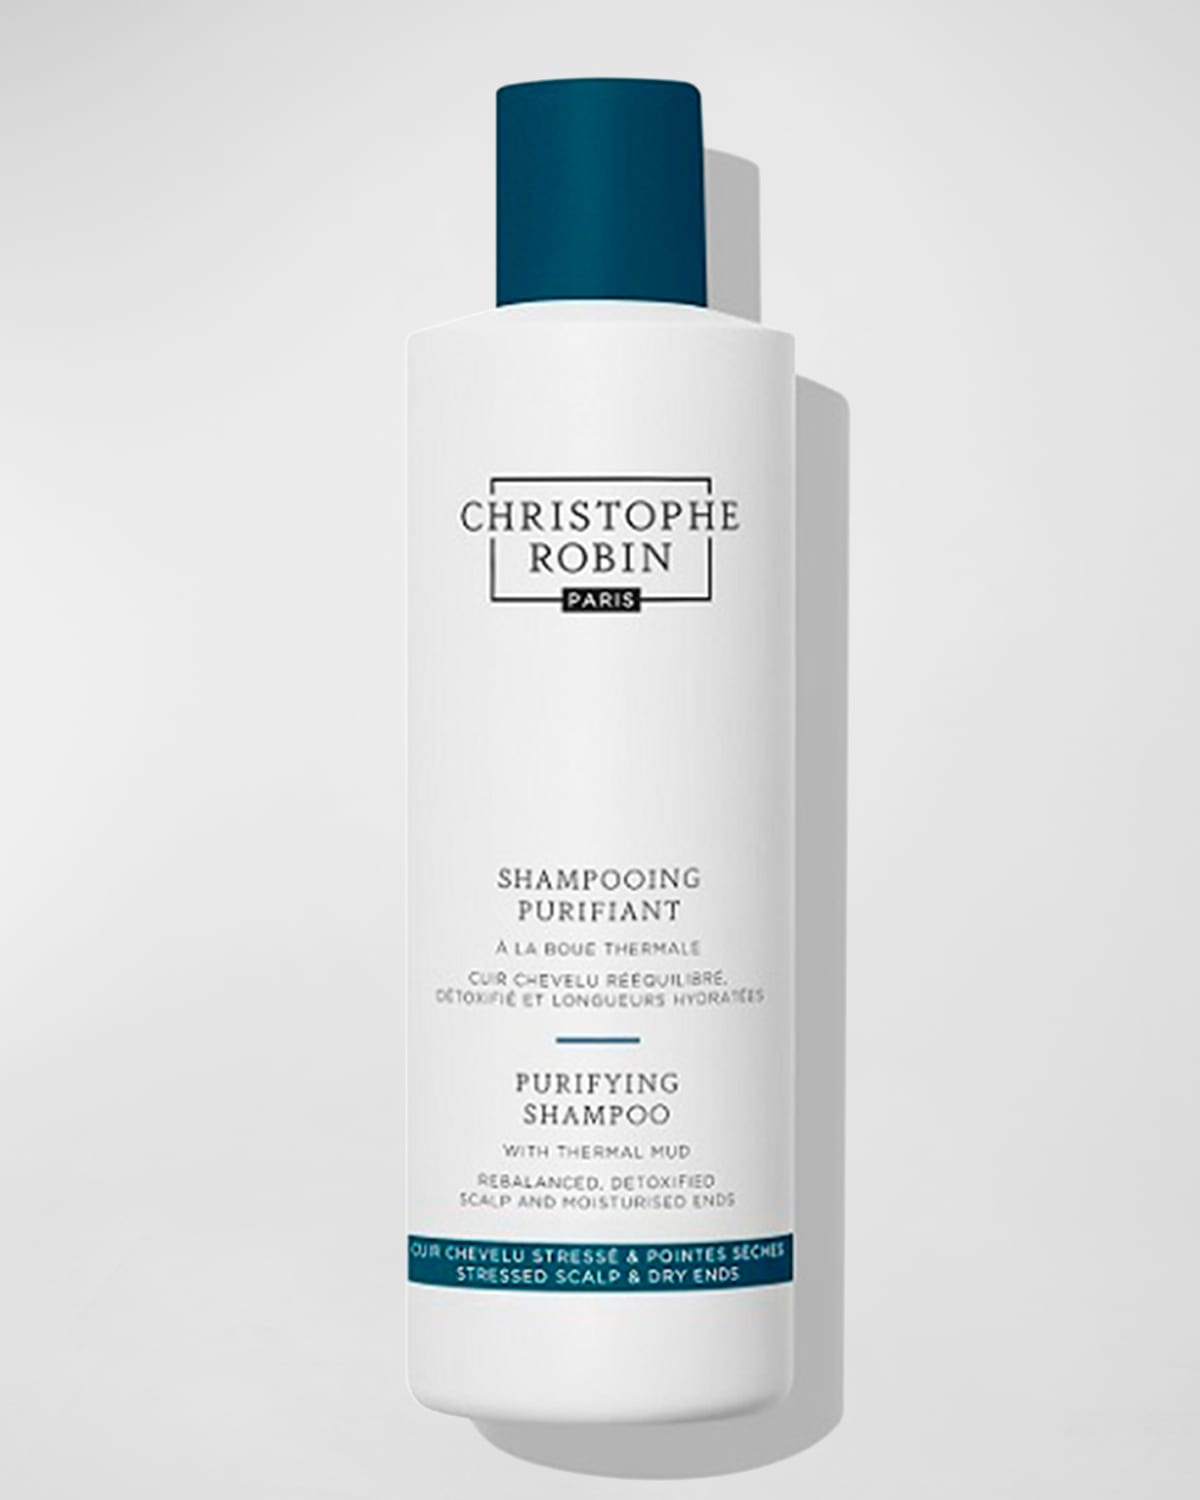 Christophe Robin Advanced Purifying Shampoo